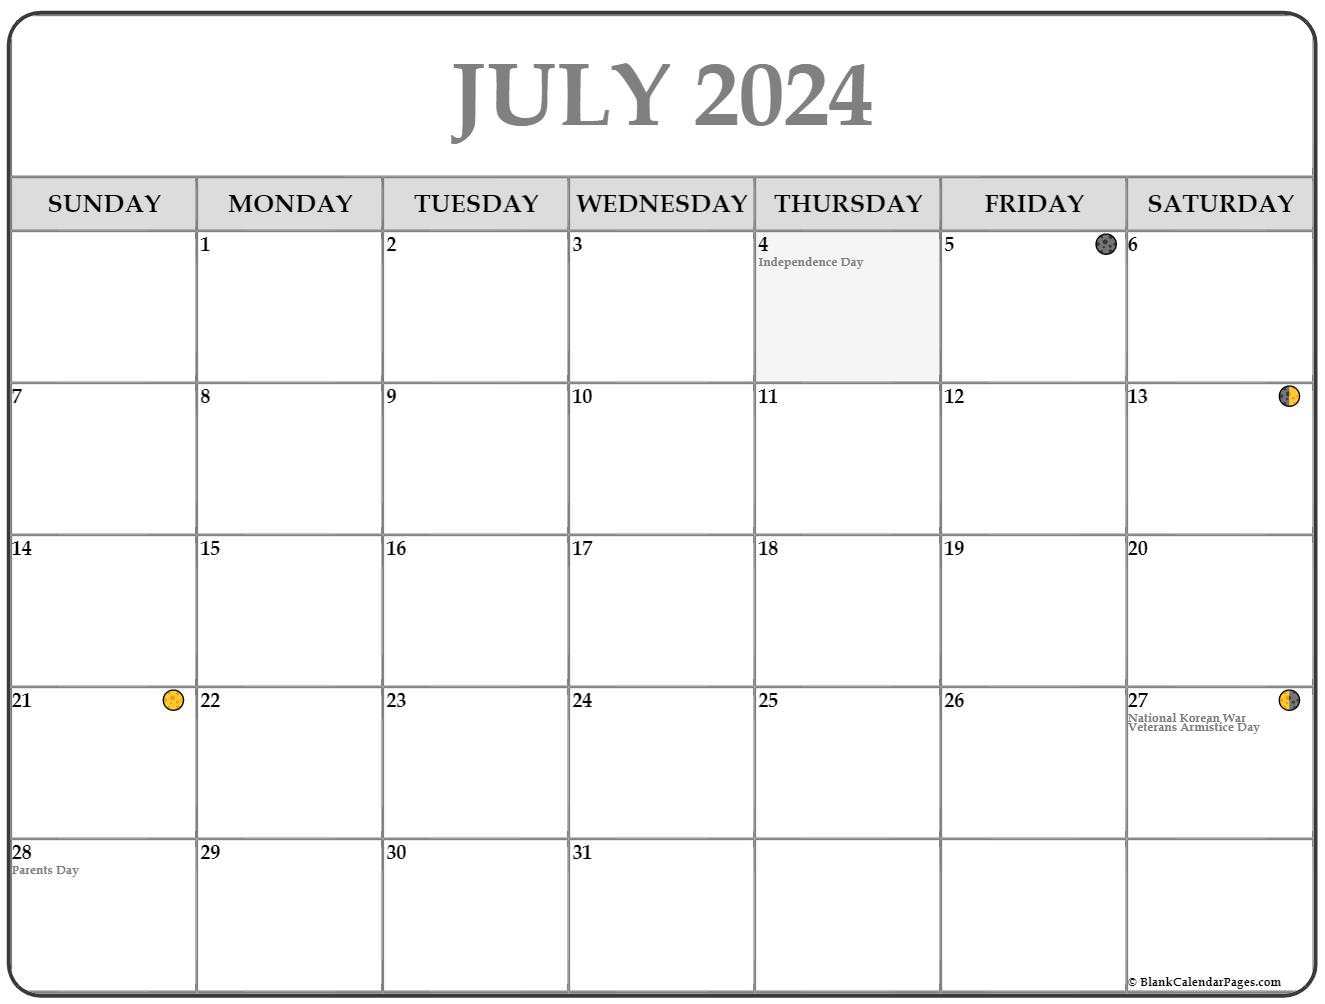 July 2024 Lunar Calendar | Moon Phase Calendar regarding Moon Phase Calendar For July 2024